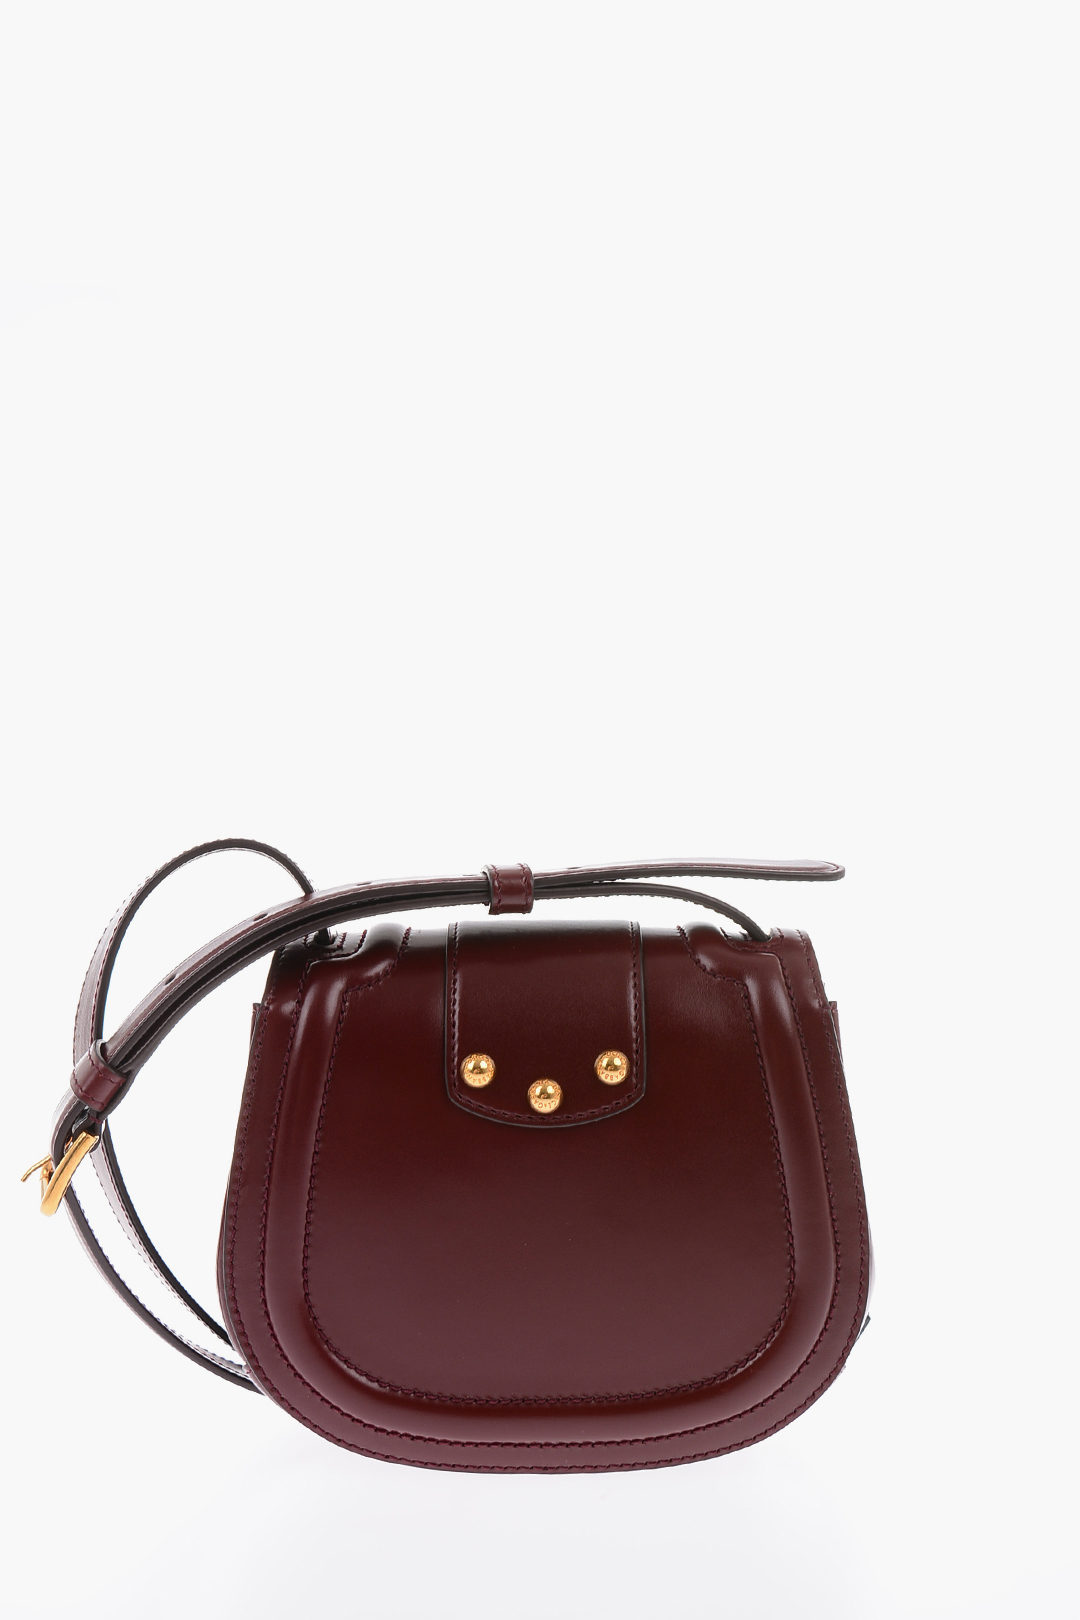 Dolce & Gabbana Amore mini bag - ShopStyle